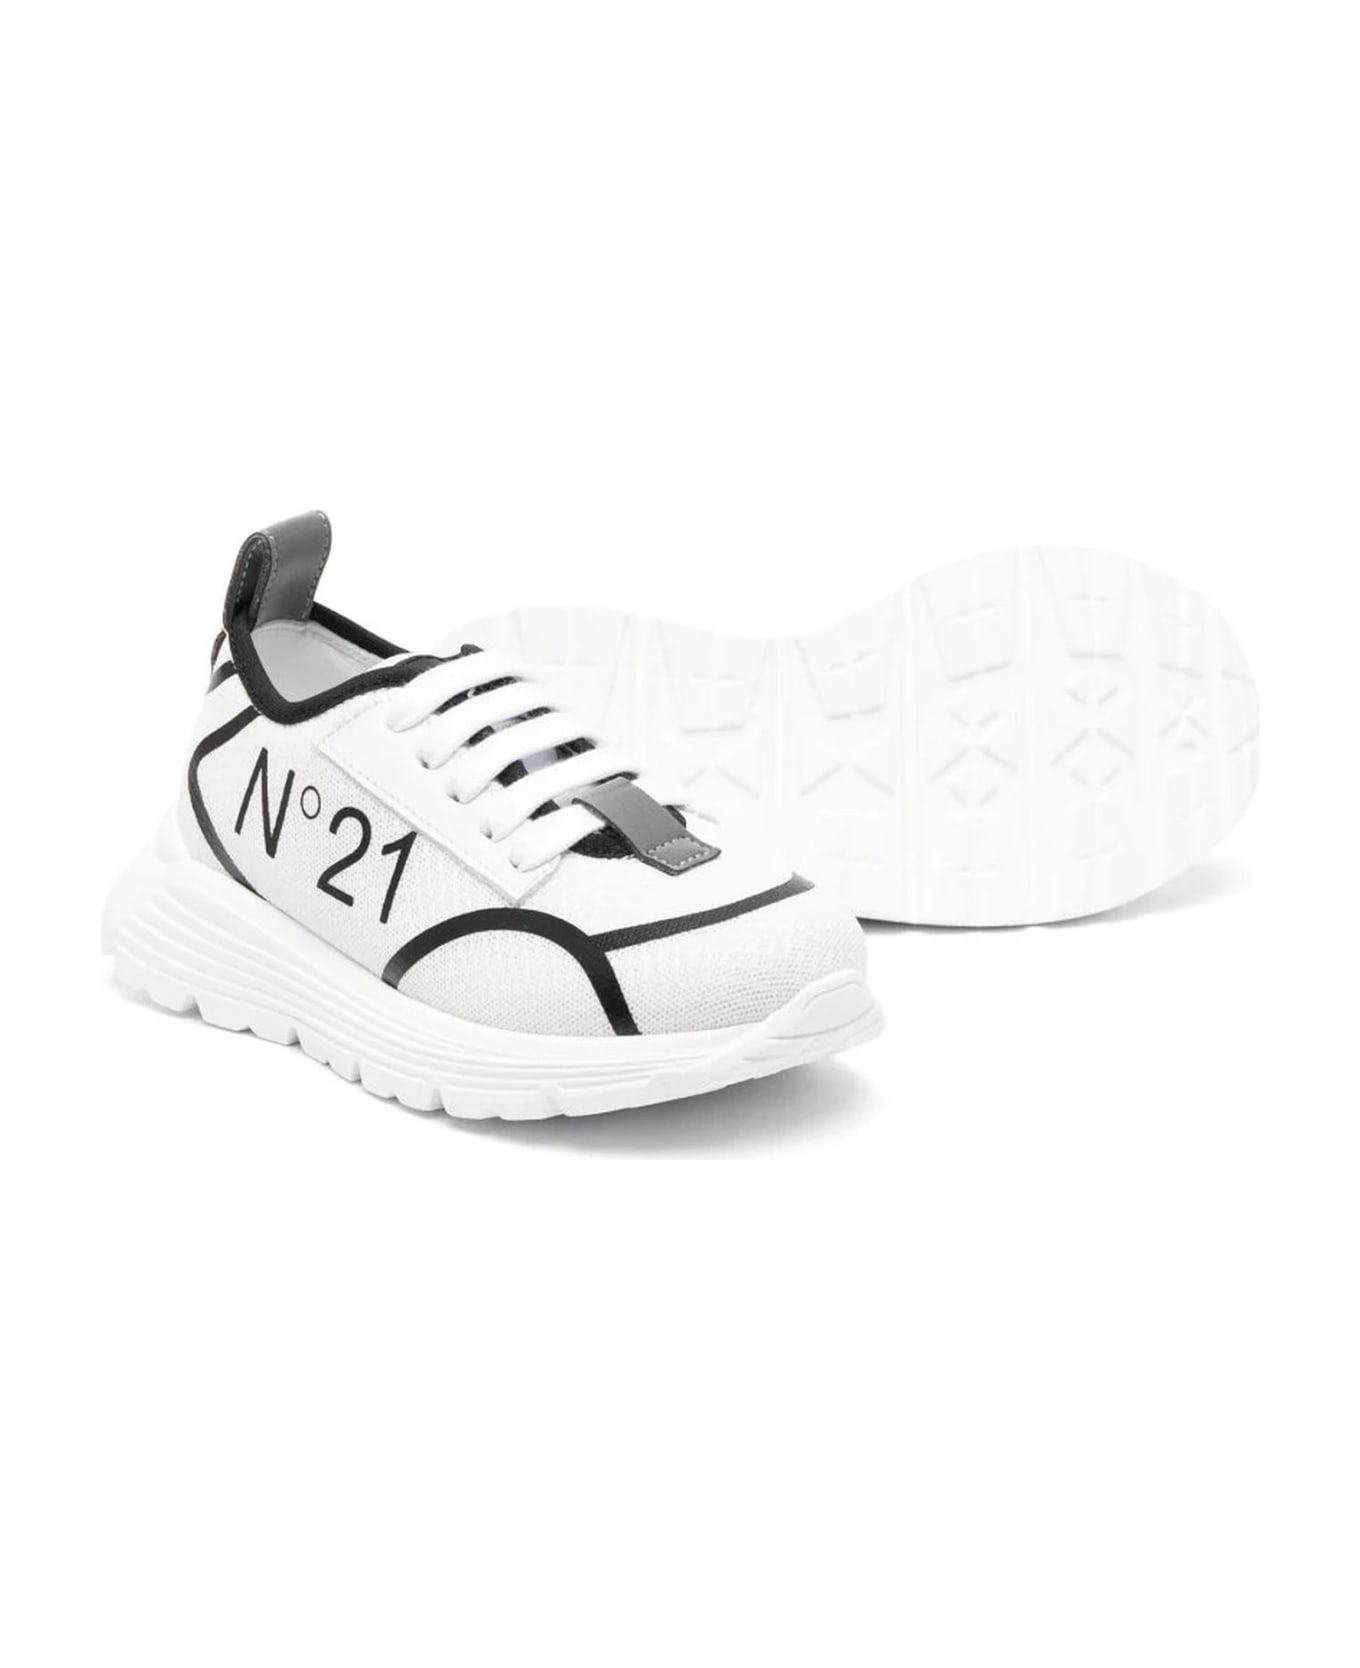 N.21 N°21 Sneakers White - White シューズ